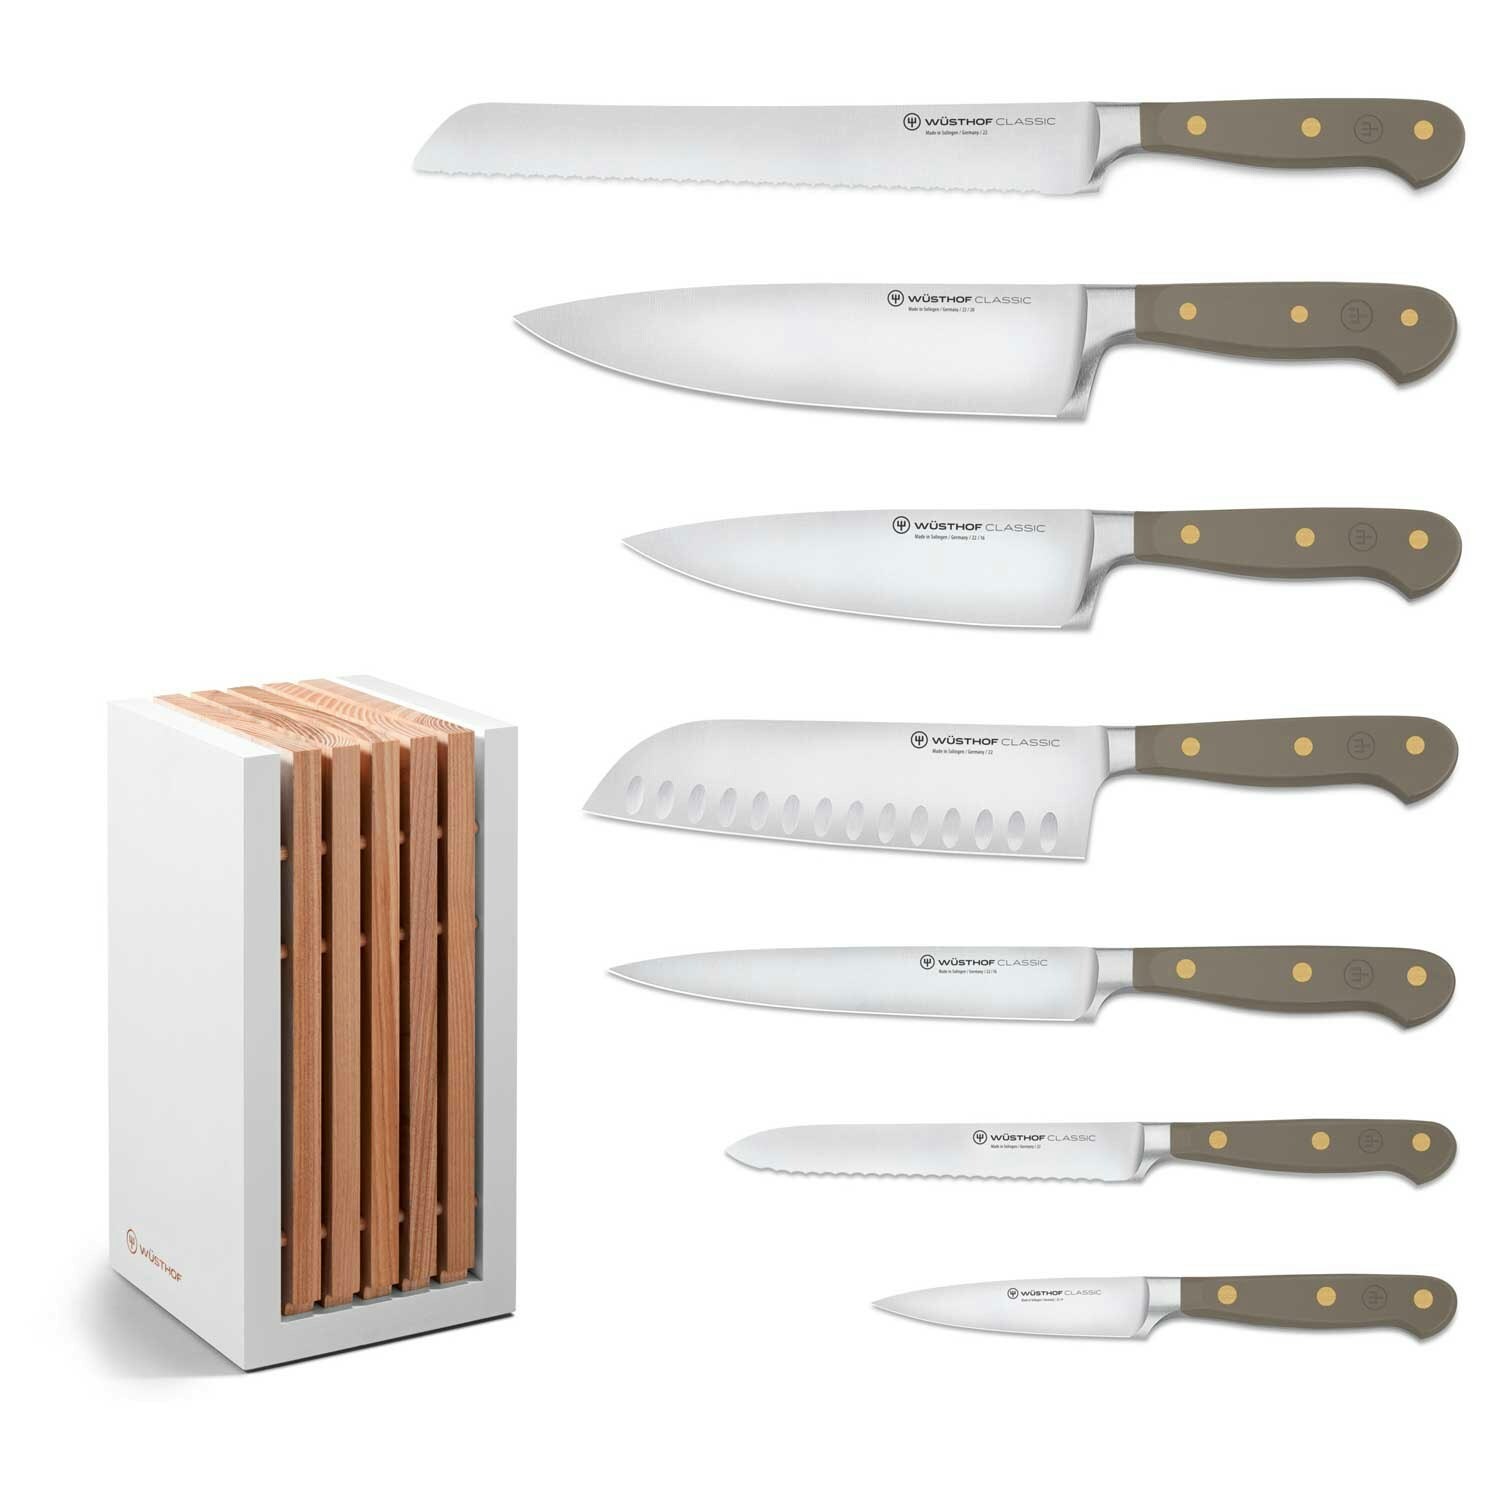 https://royaldesign.com/image/2/wusthof-classic-colour-knife-set-with-knife-block-8-pieces-0